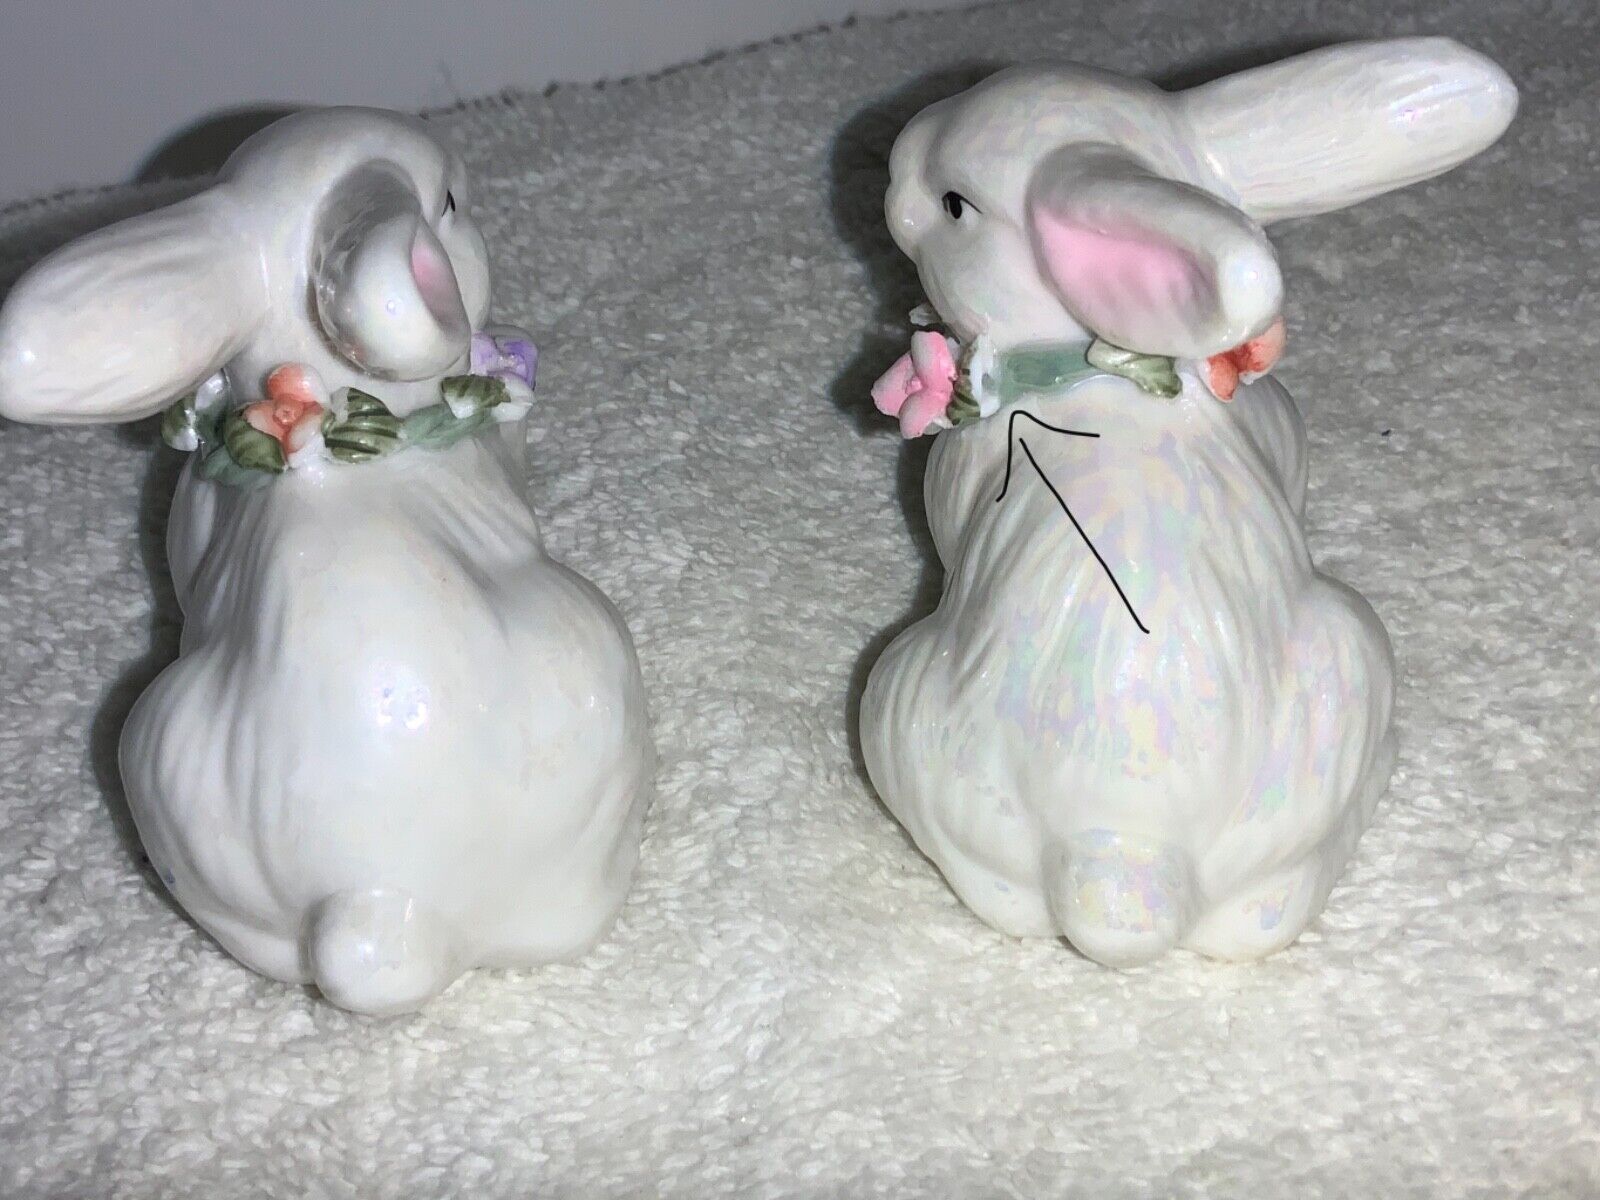 Two White Ceramic Rabbits with Flowers around Neck | eBay